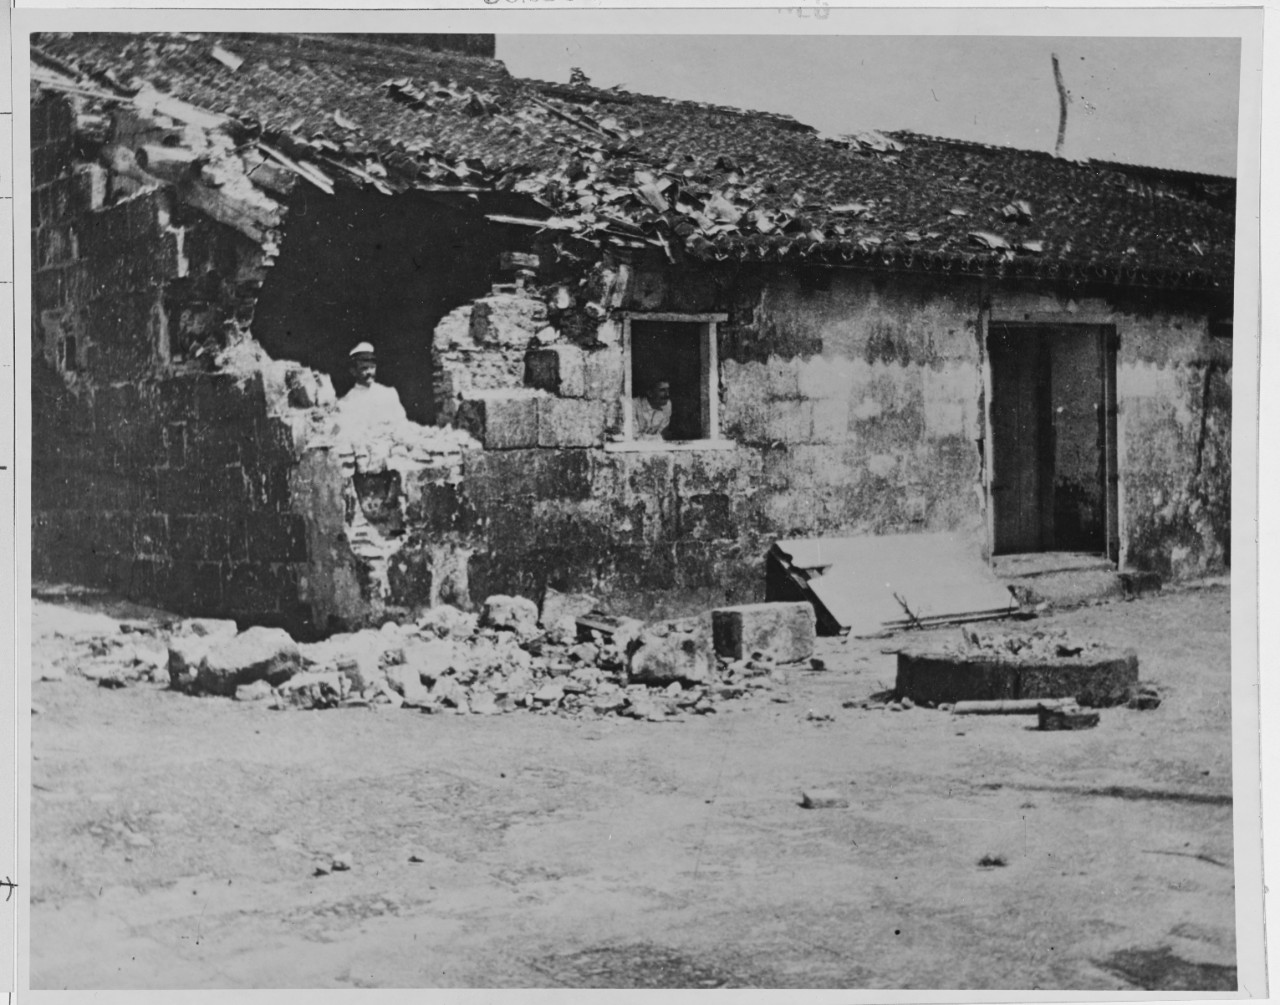 Photo #: USN 902953  Bombardment of Fort San Antonio de Abad, Malate, Philippines, 13 August 1898